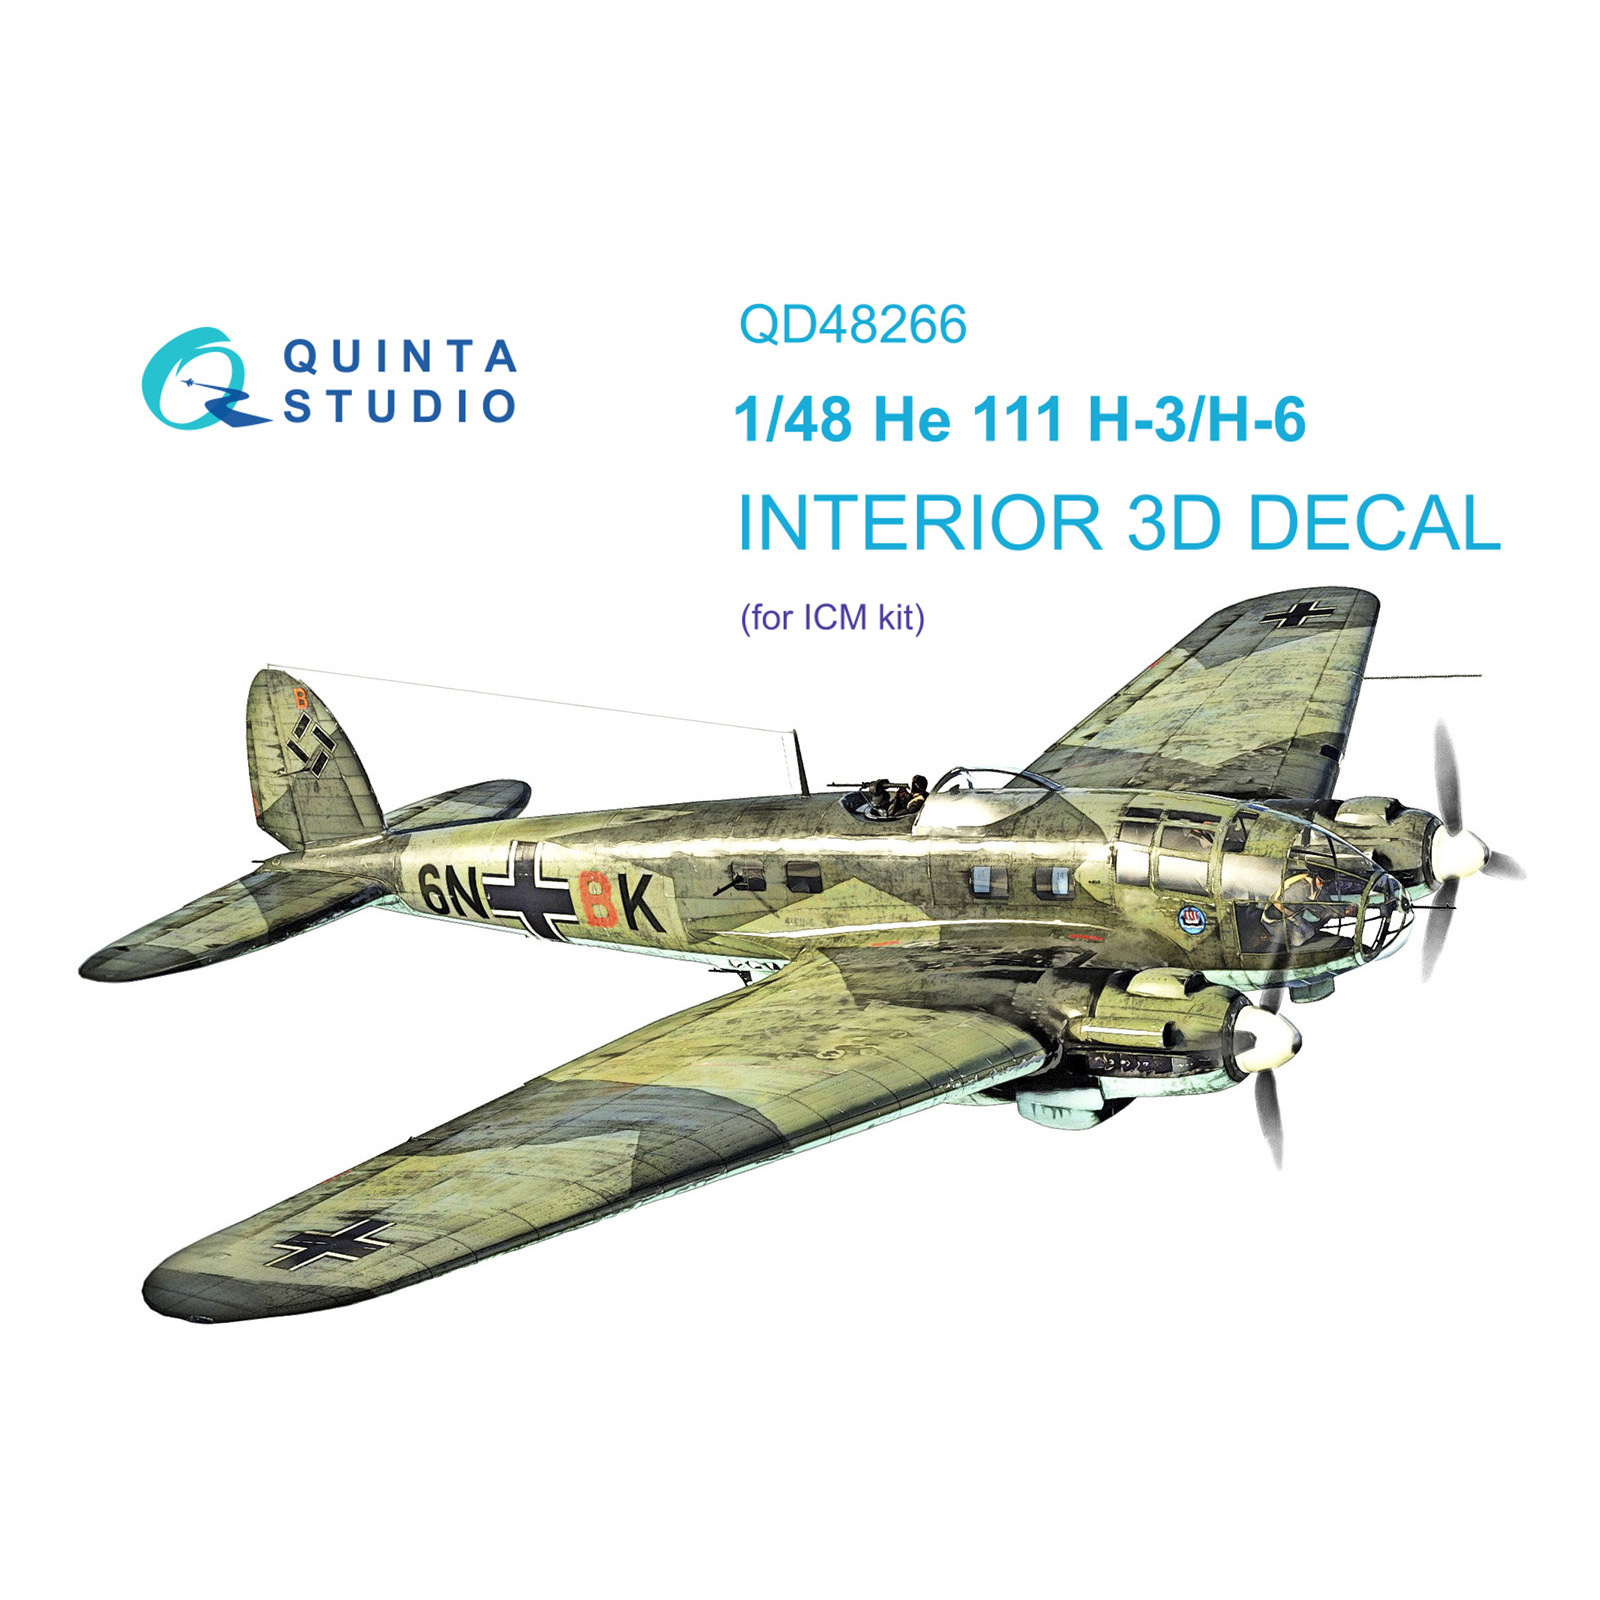 QD48266 Quinta Studio 1/48 3D Cabin Interior Decal He 111H-3/H-6 (ICM)